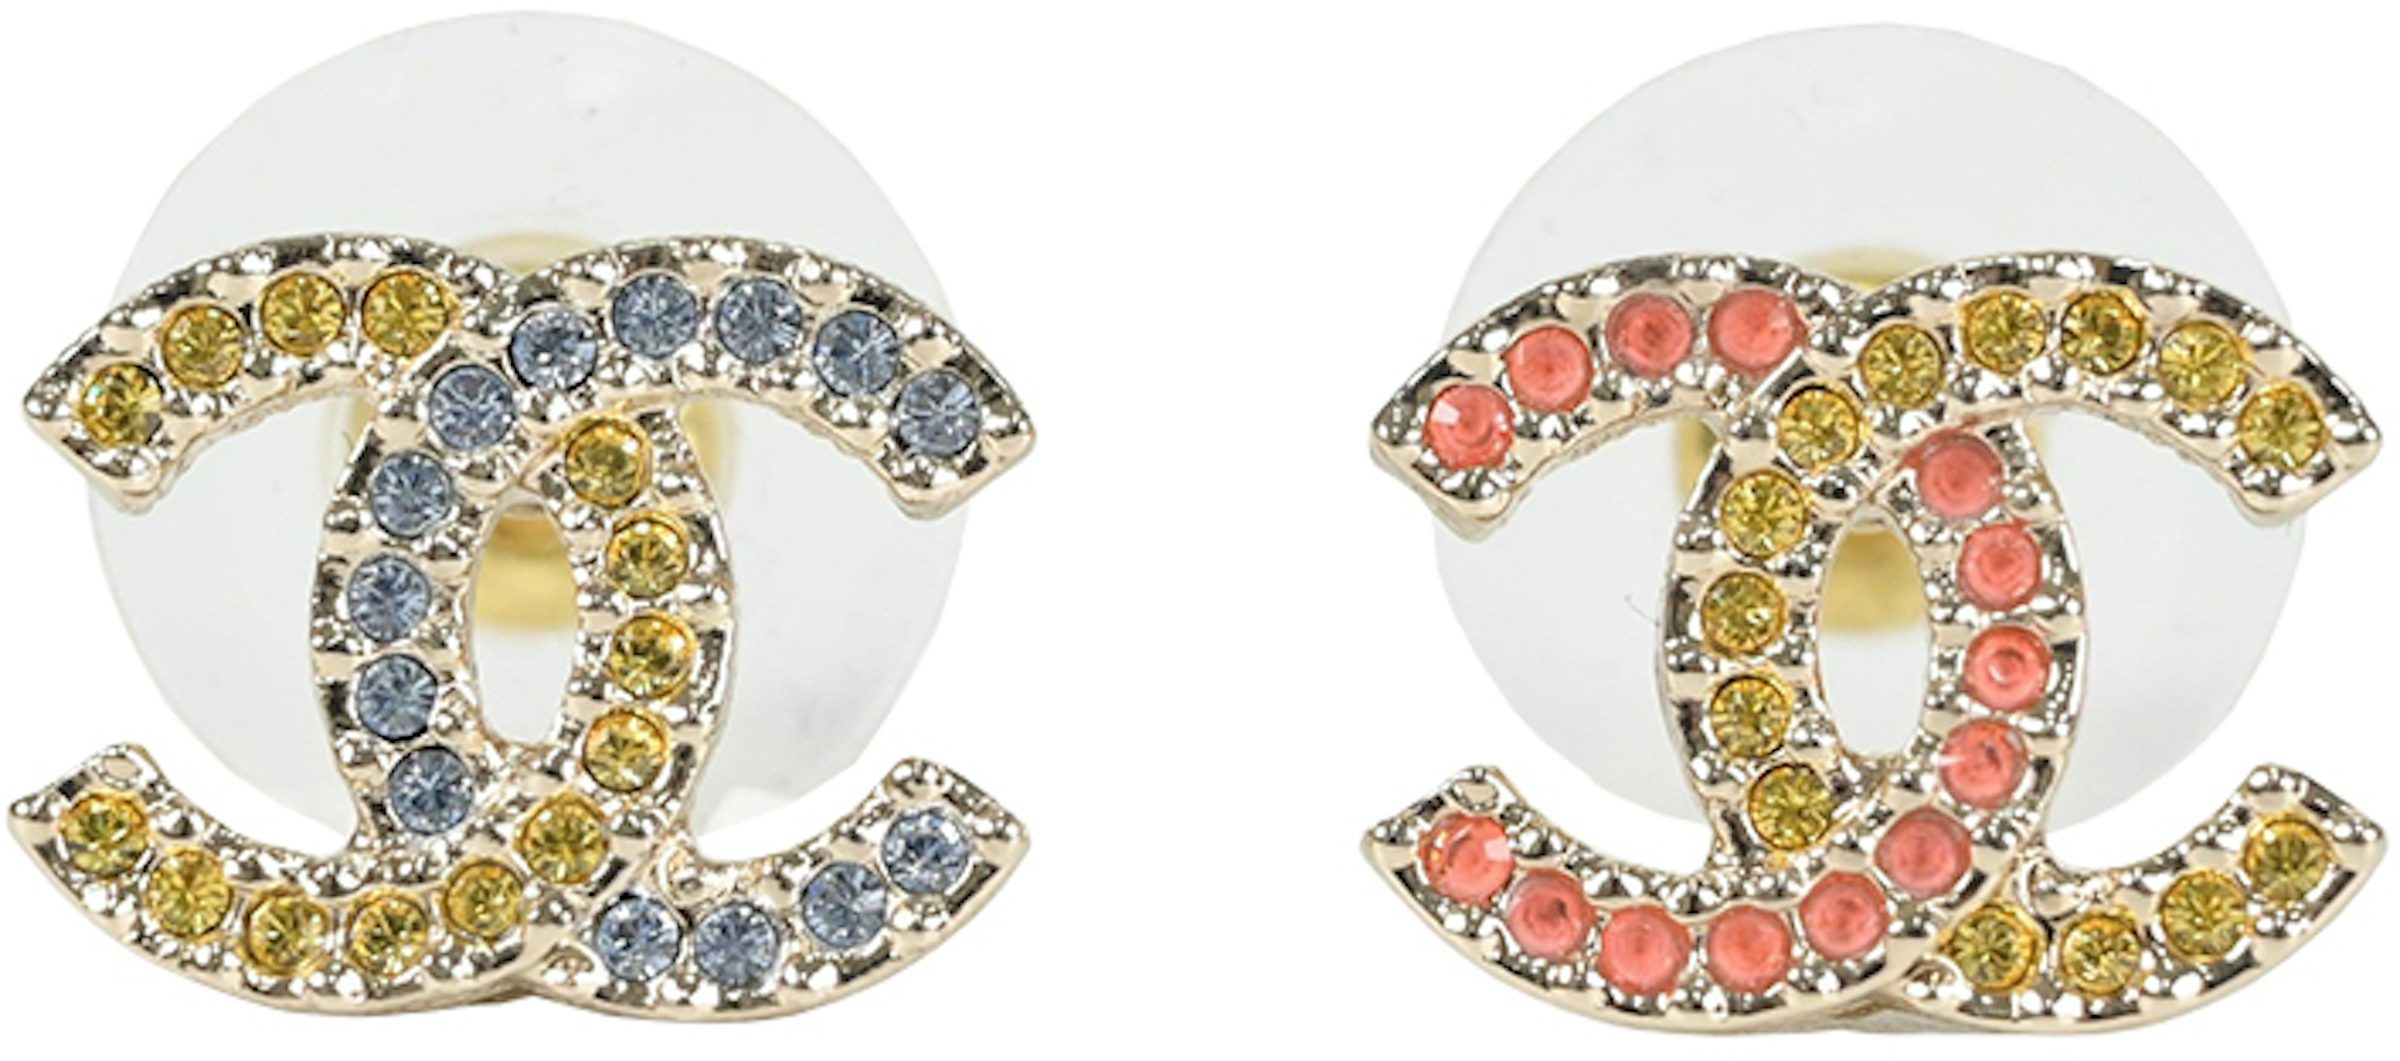 AUTHENTIC CHANEL B20 S Drop Logo Crystal earrings in Chanel Box